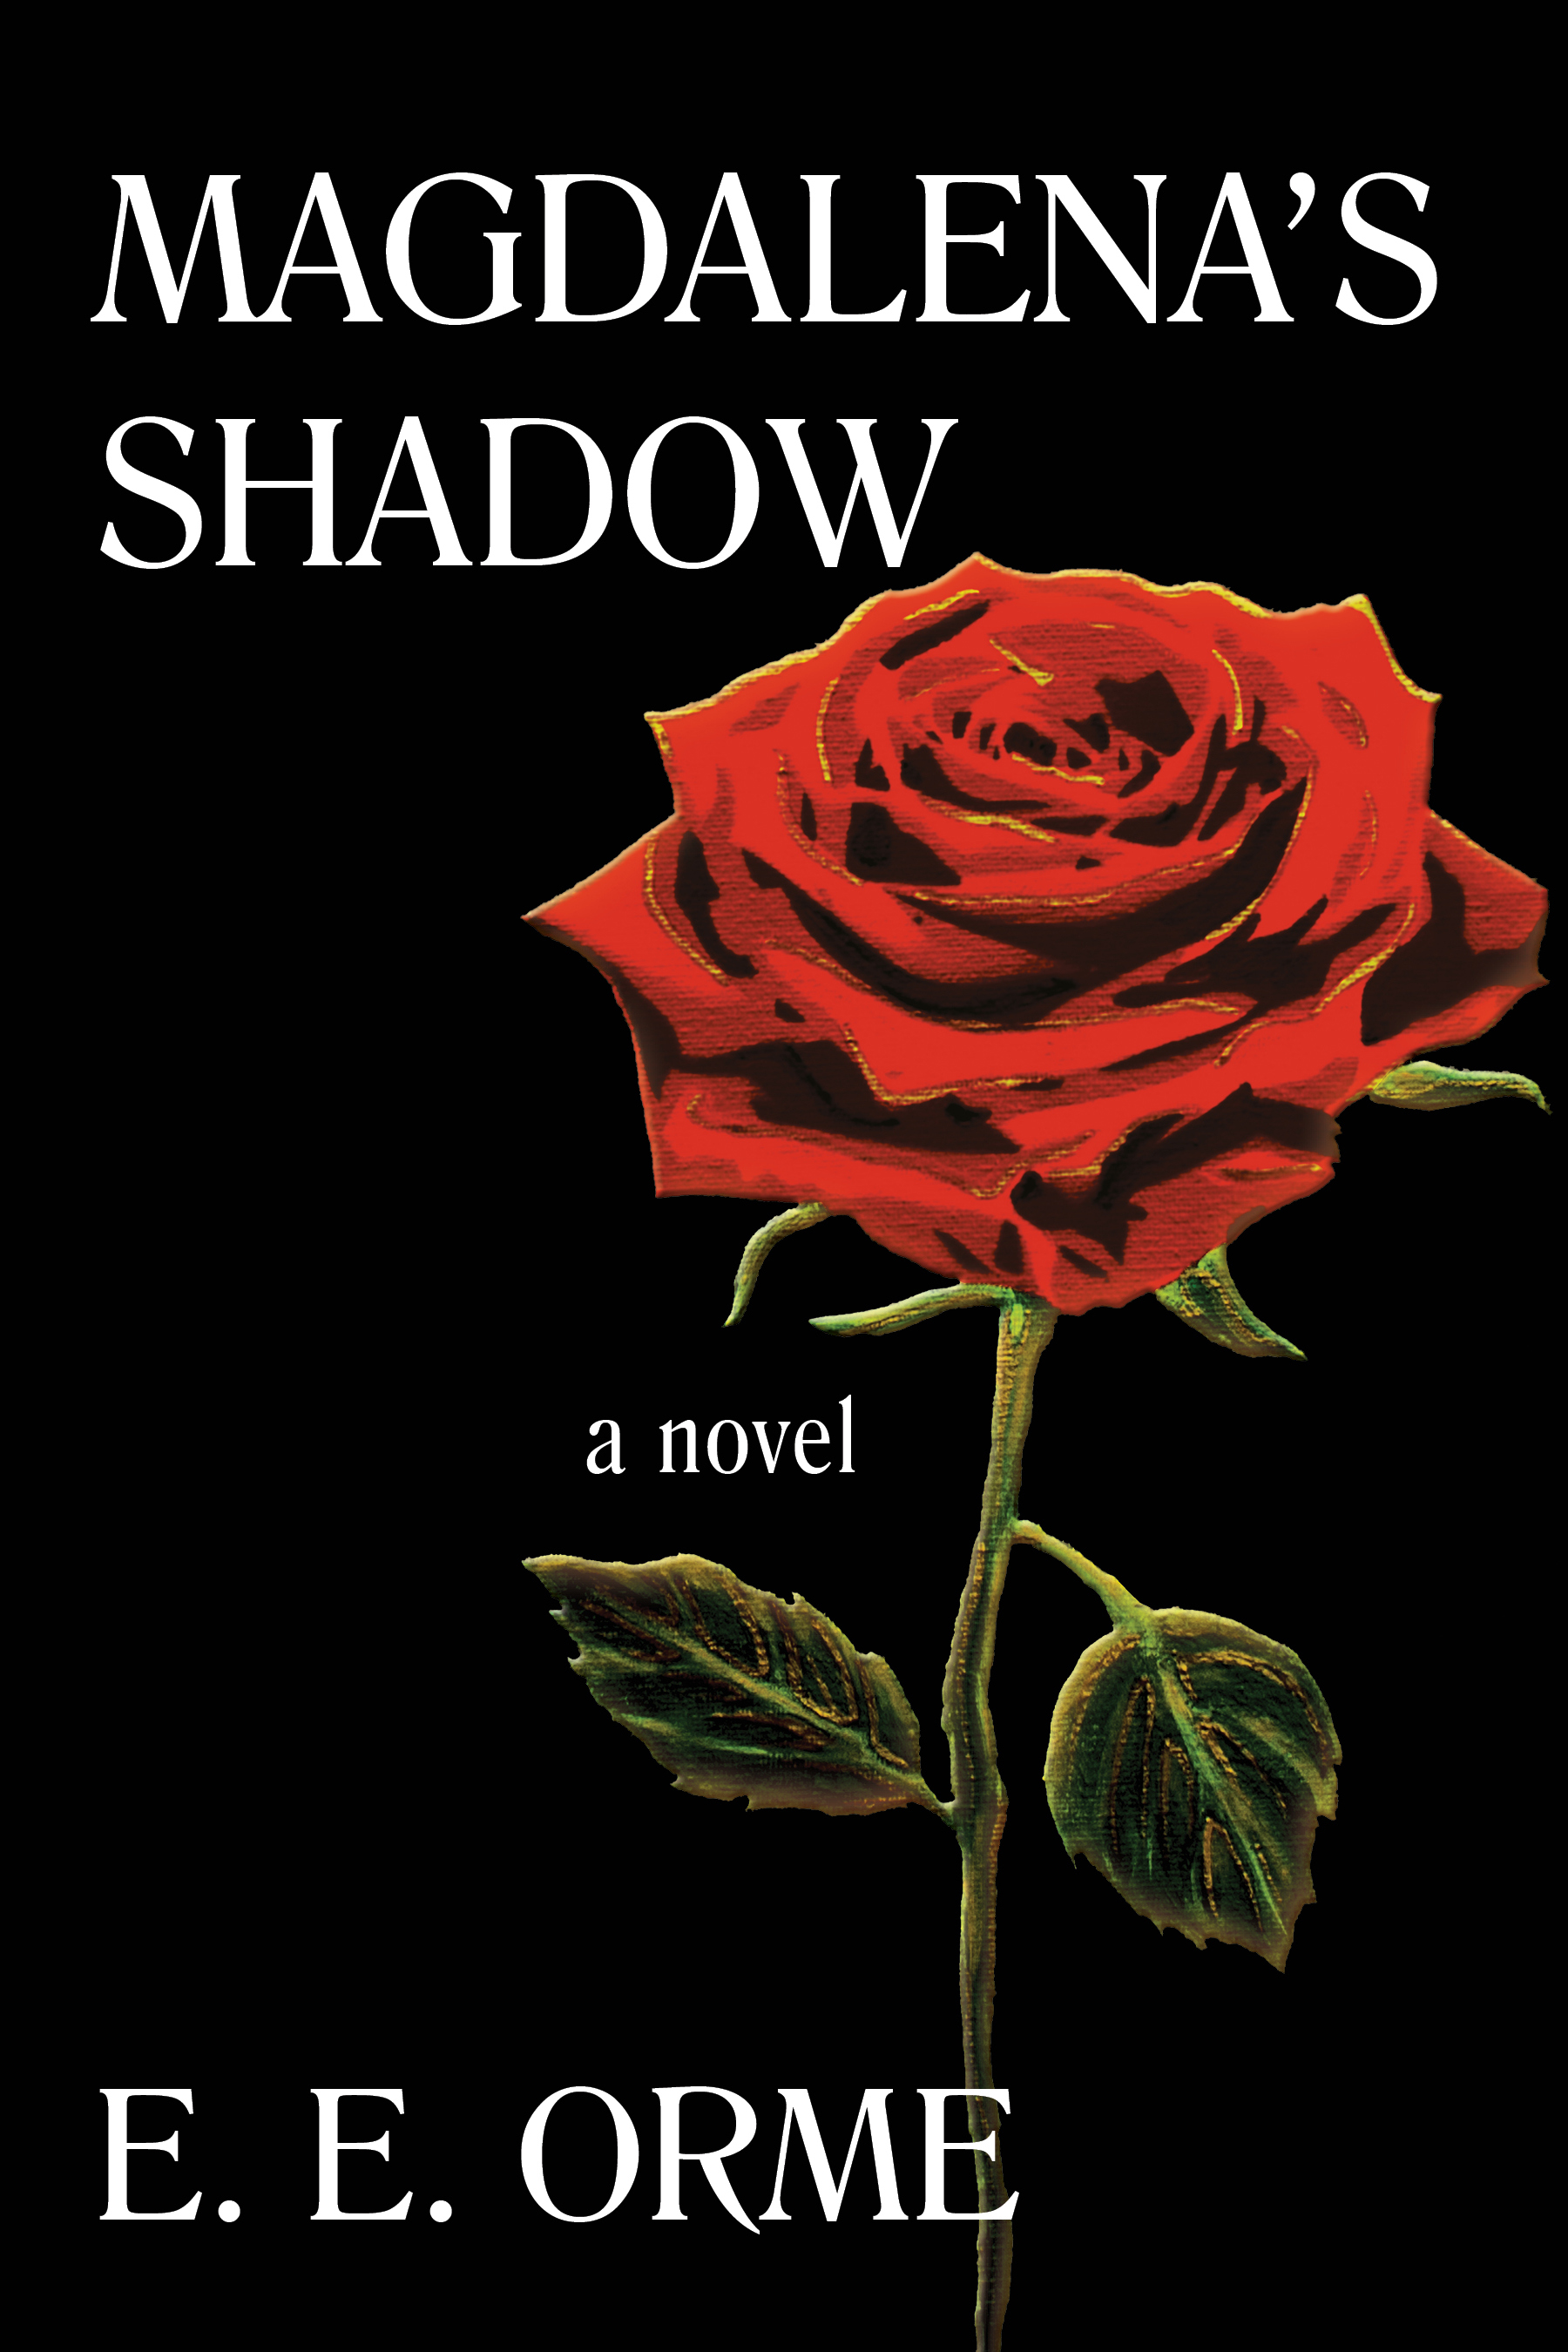 Magdalena's Shadow by E. E. Orme